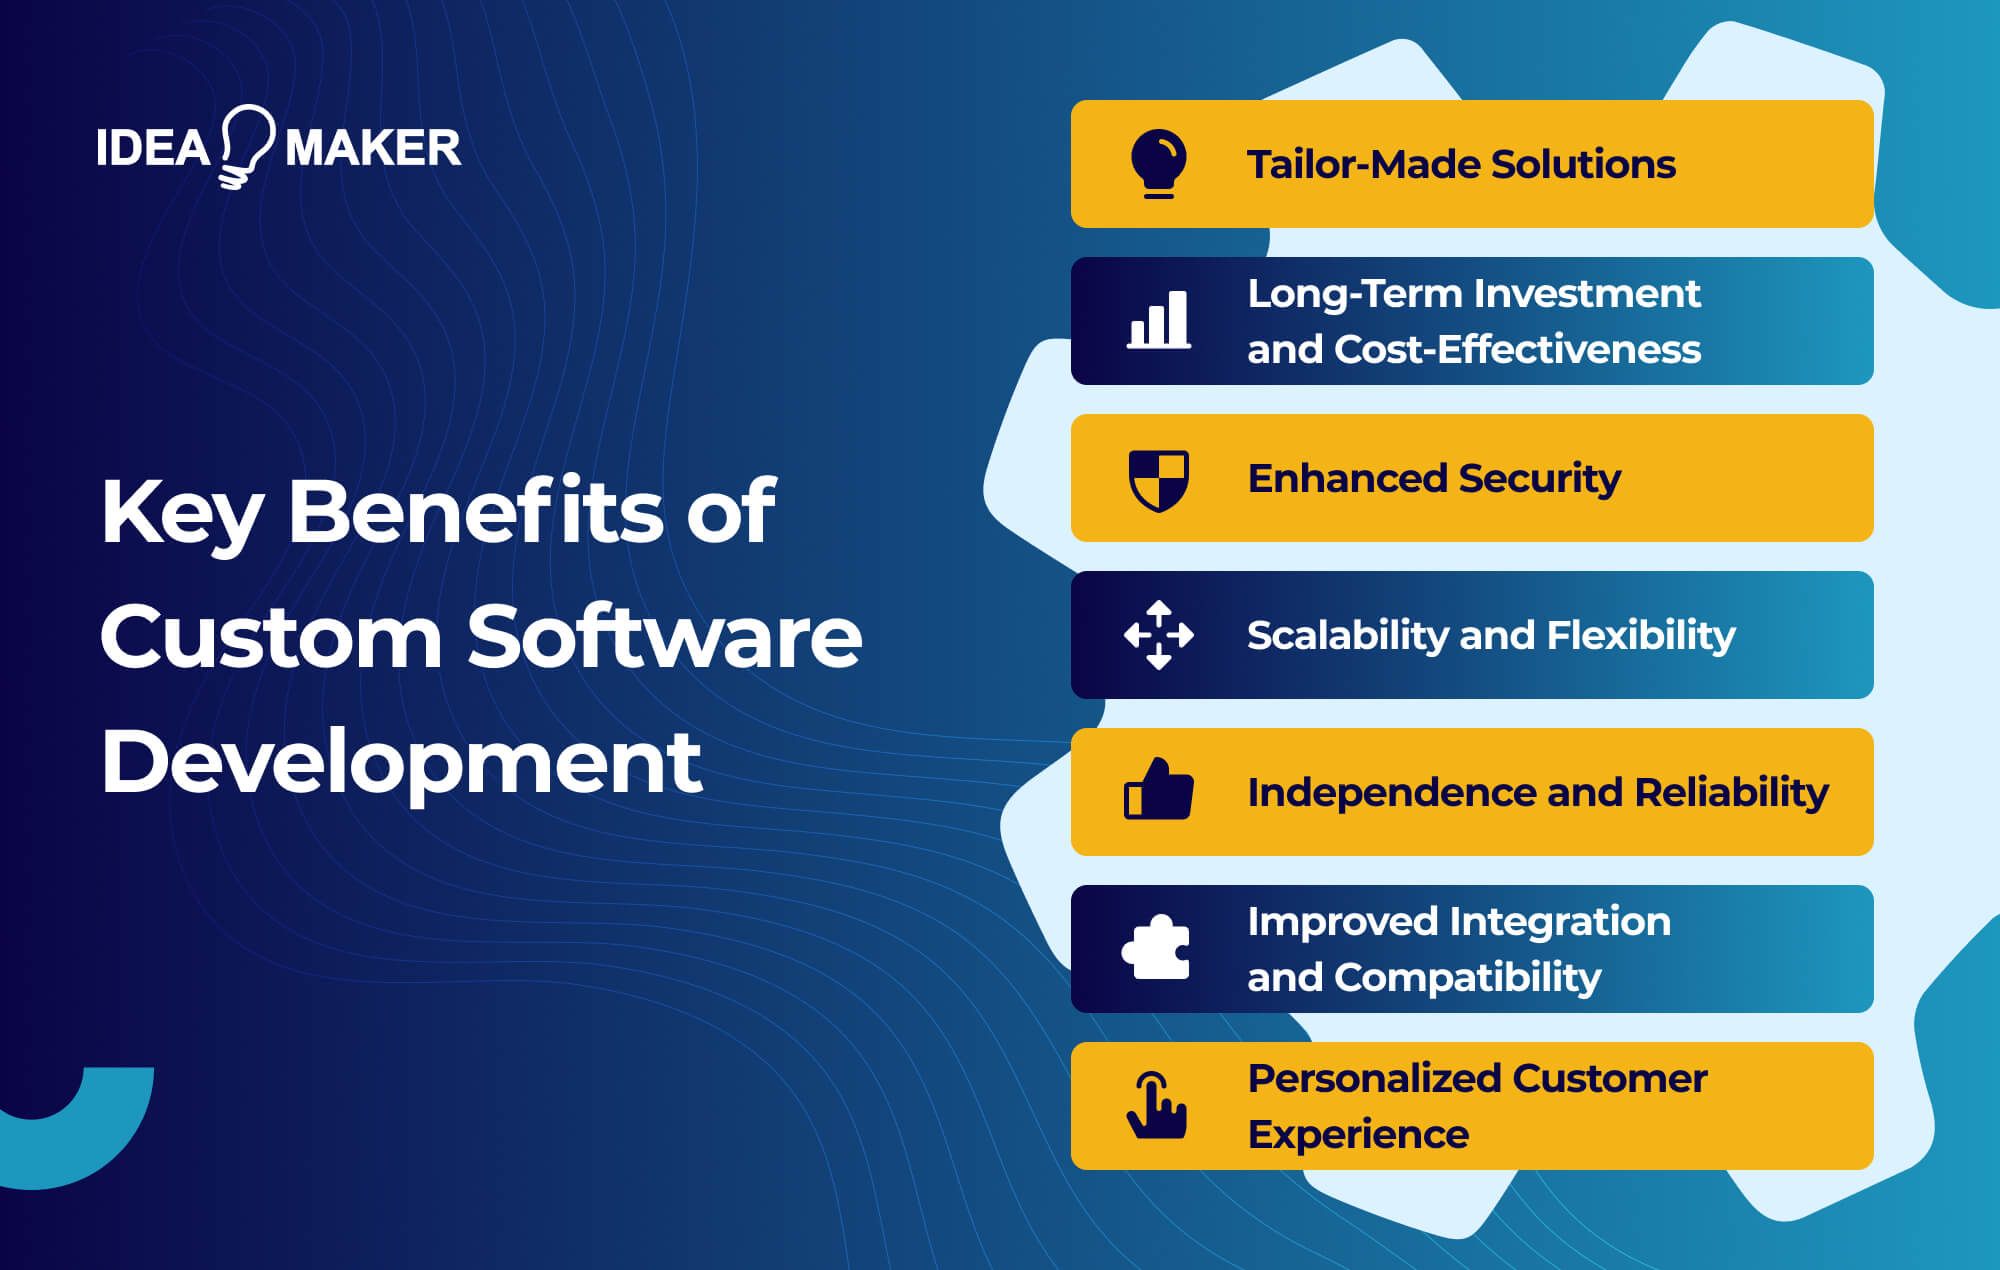 Ideamaker - Key Benefits of Custom Software Development